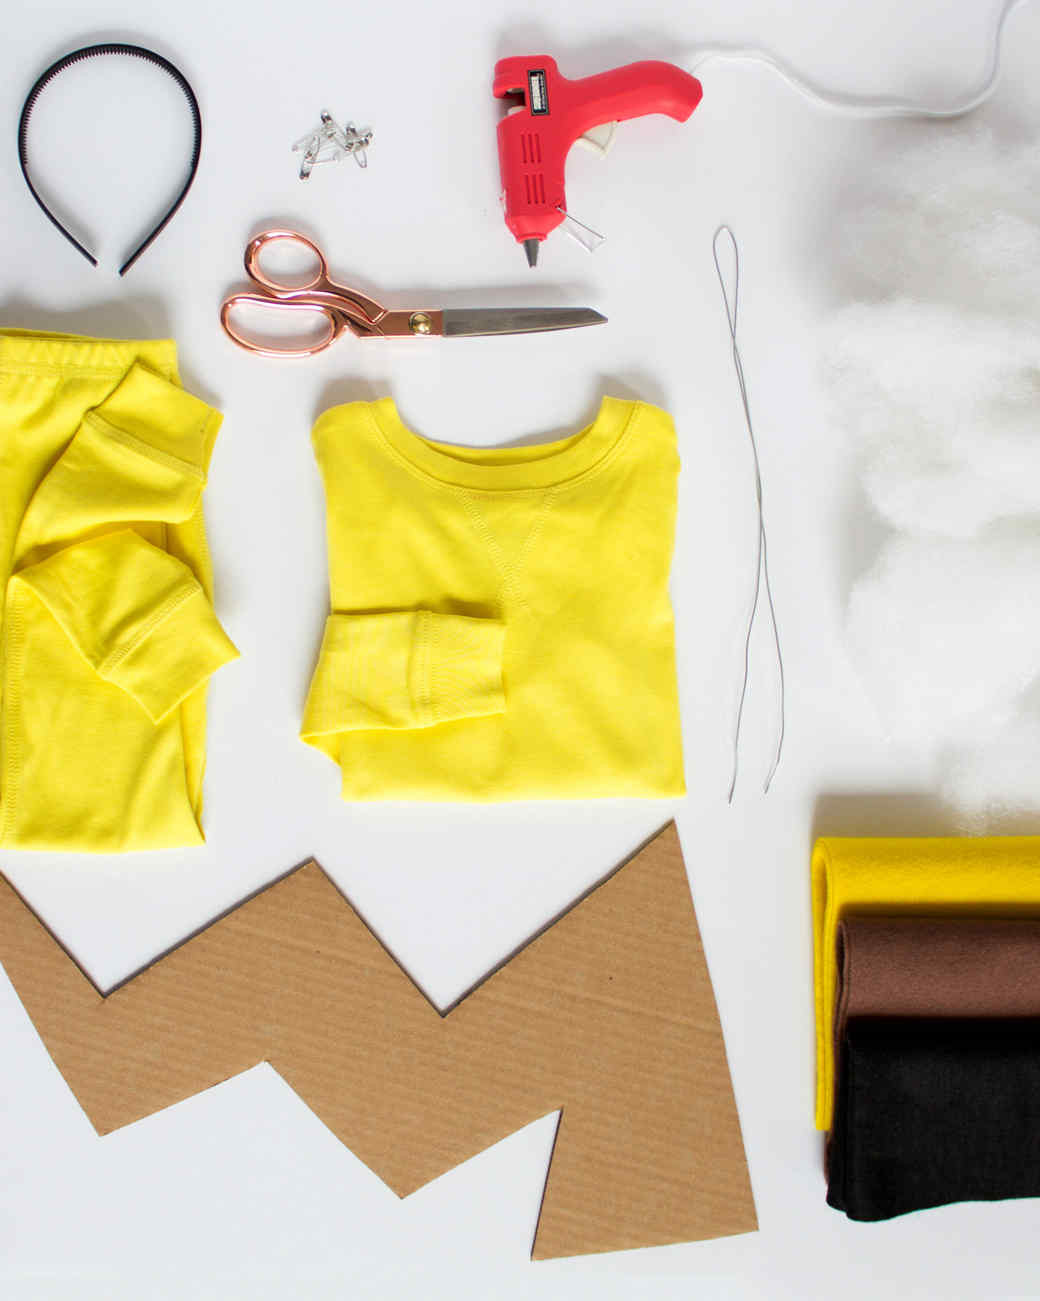 Diy Kids Pikachu Costume
 You Can Make This Pikachu Costume Using Pajamas and a Few